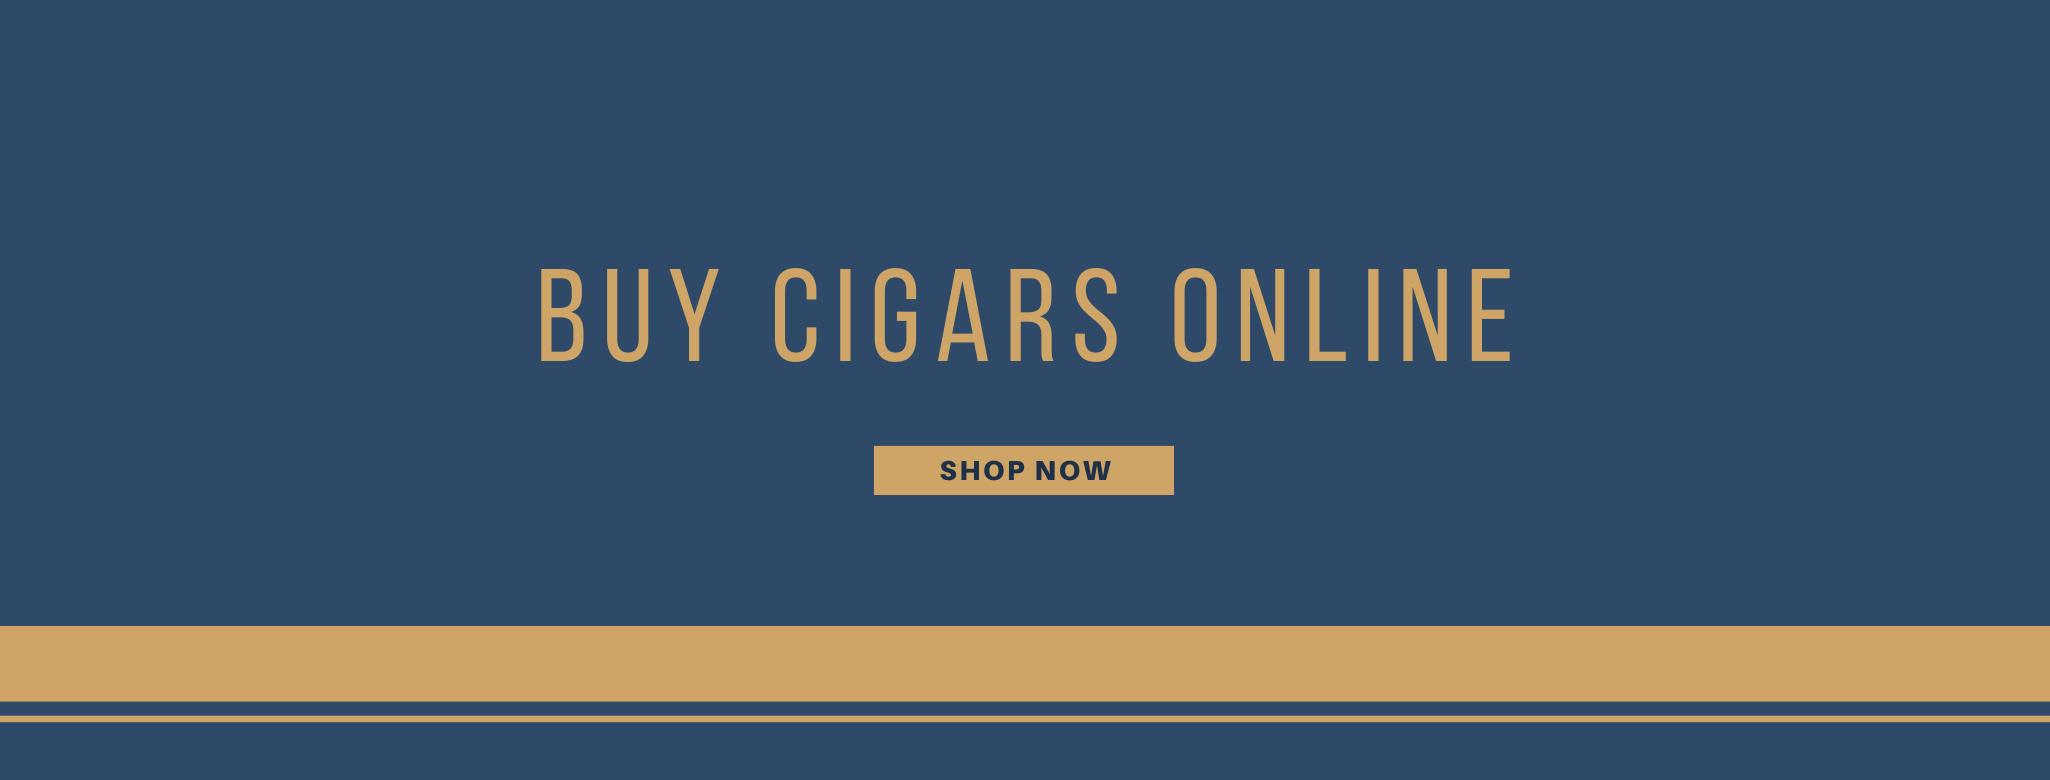 Buy cigars online